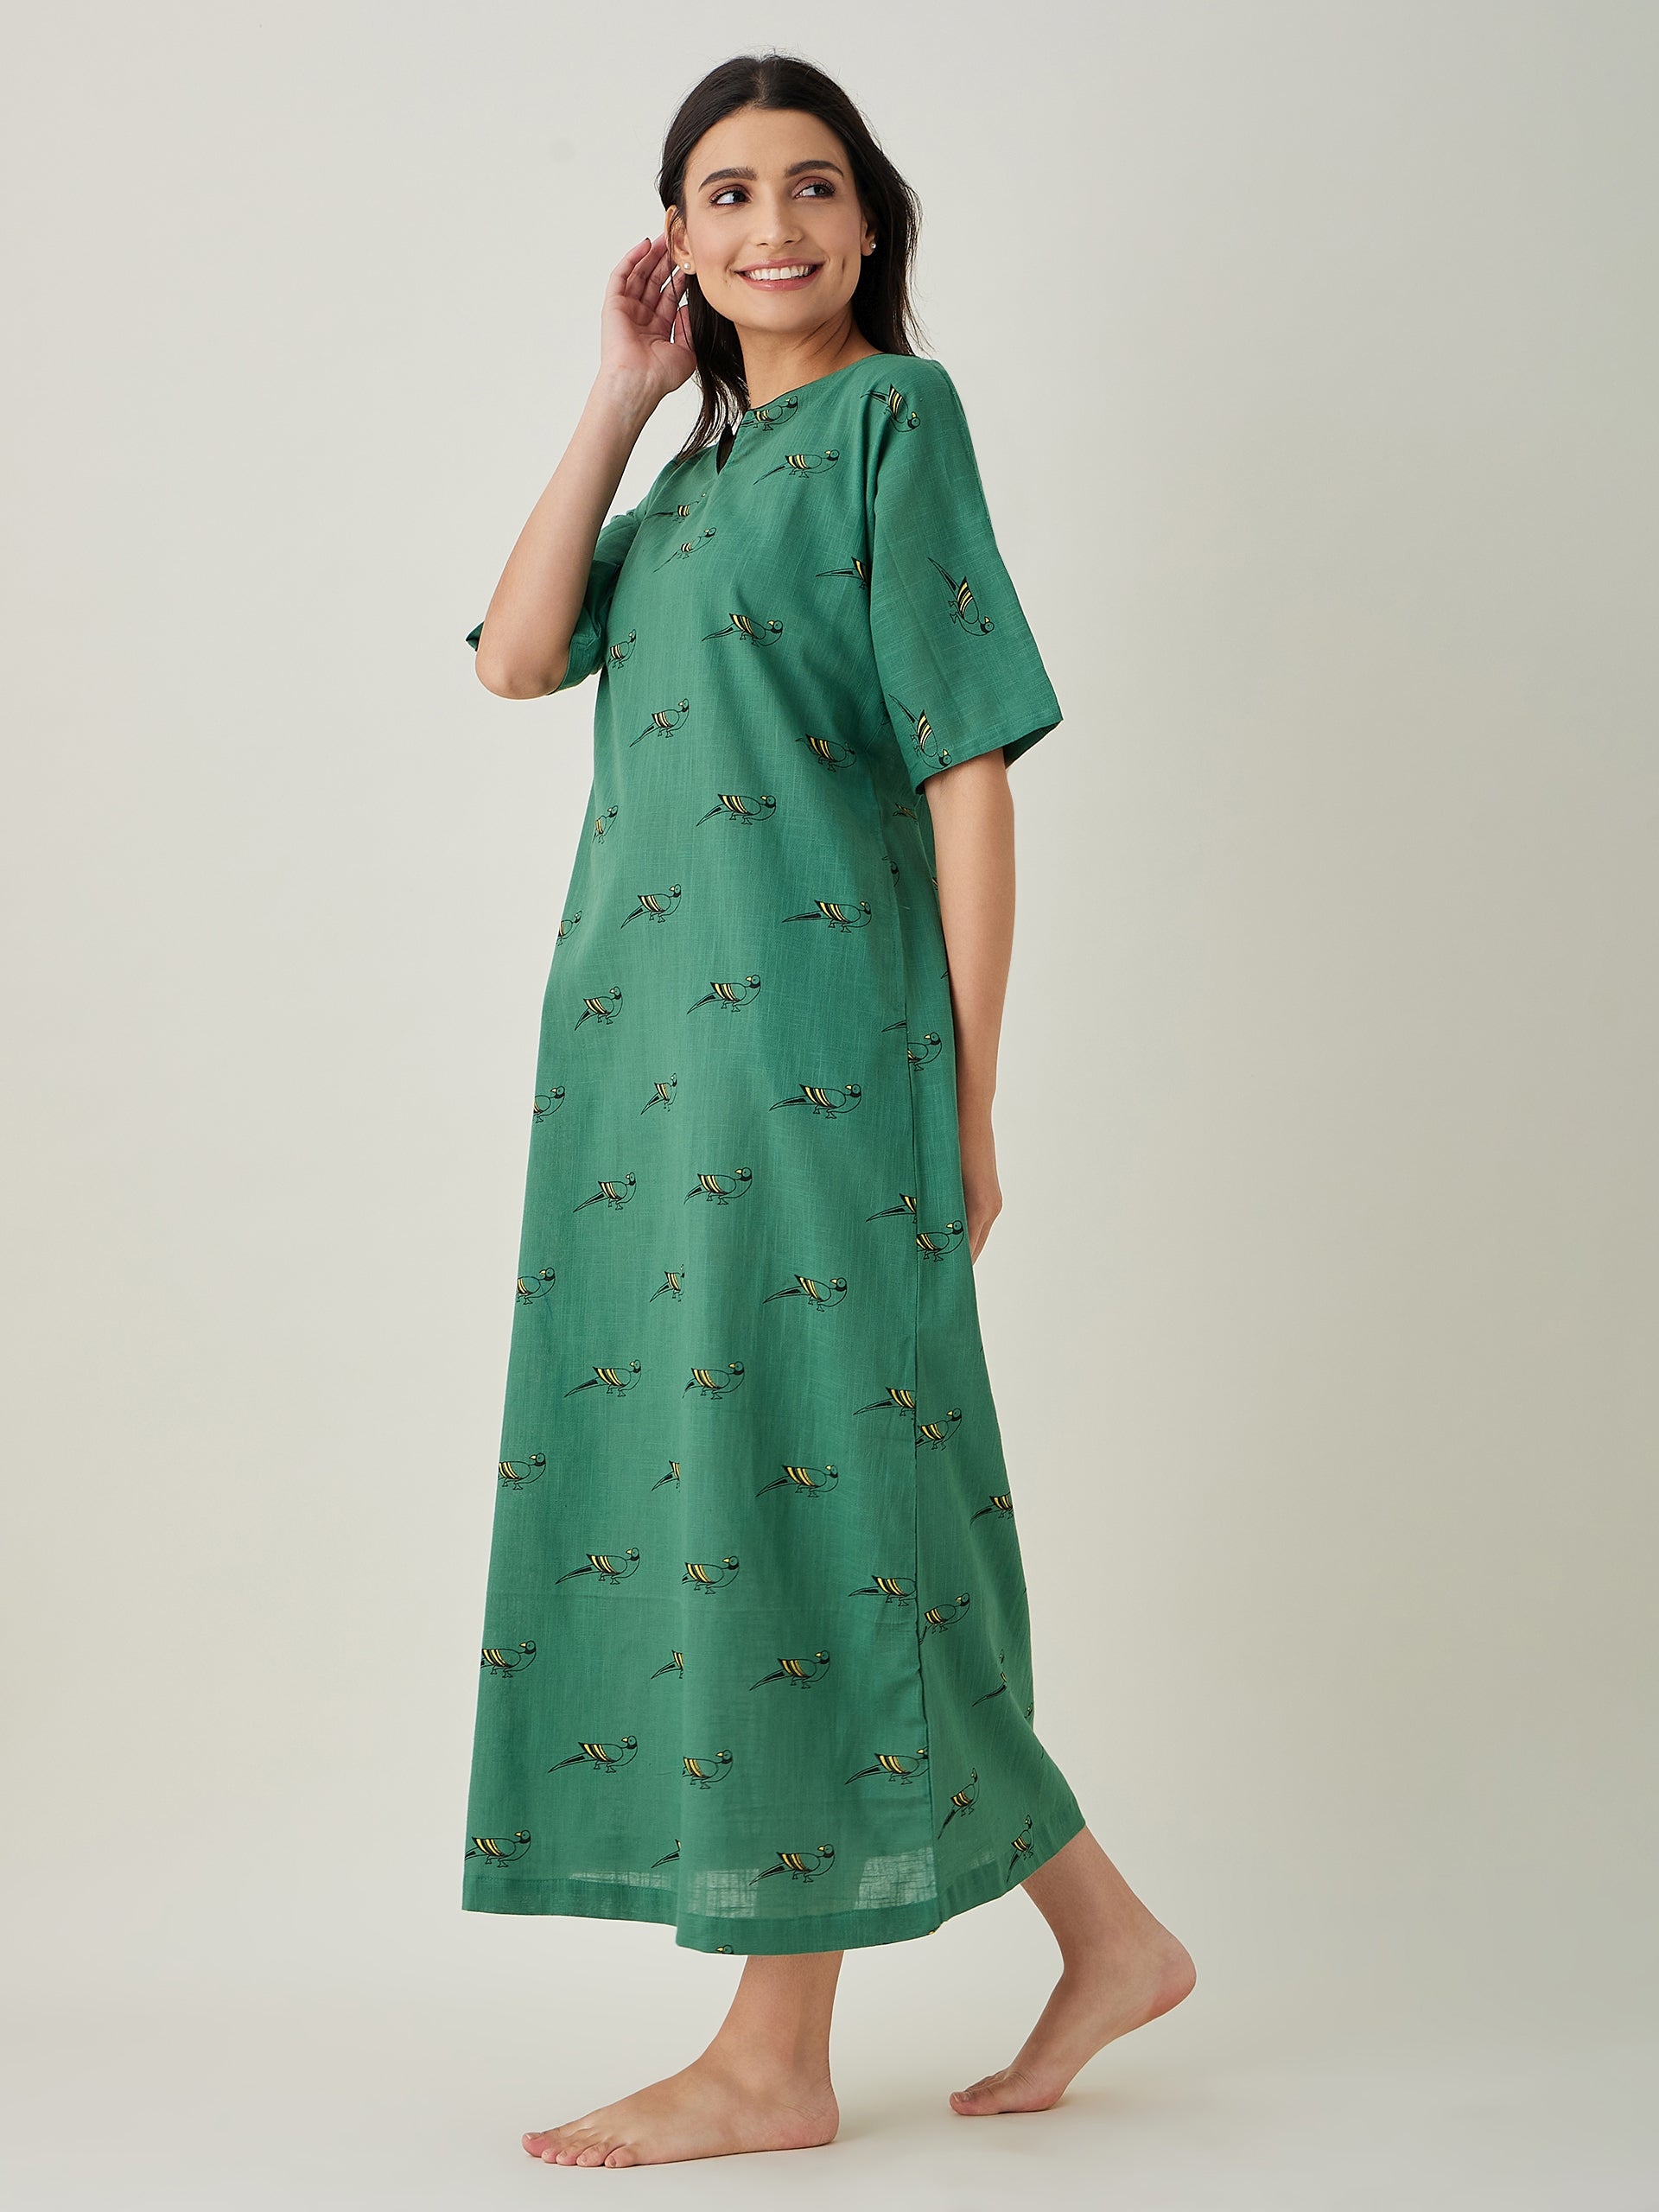 Women's Green Parrot's Perch Nightdress - The Kaftan Company